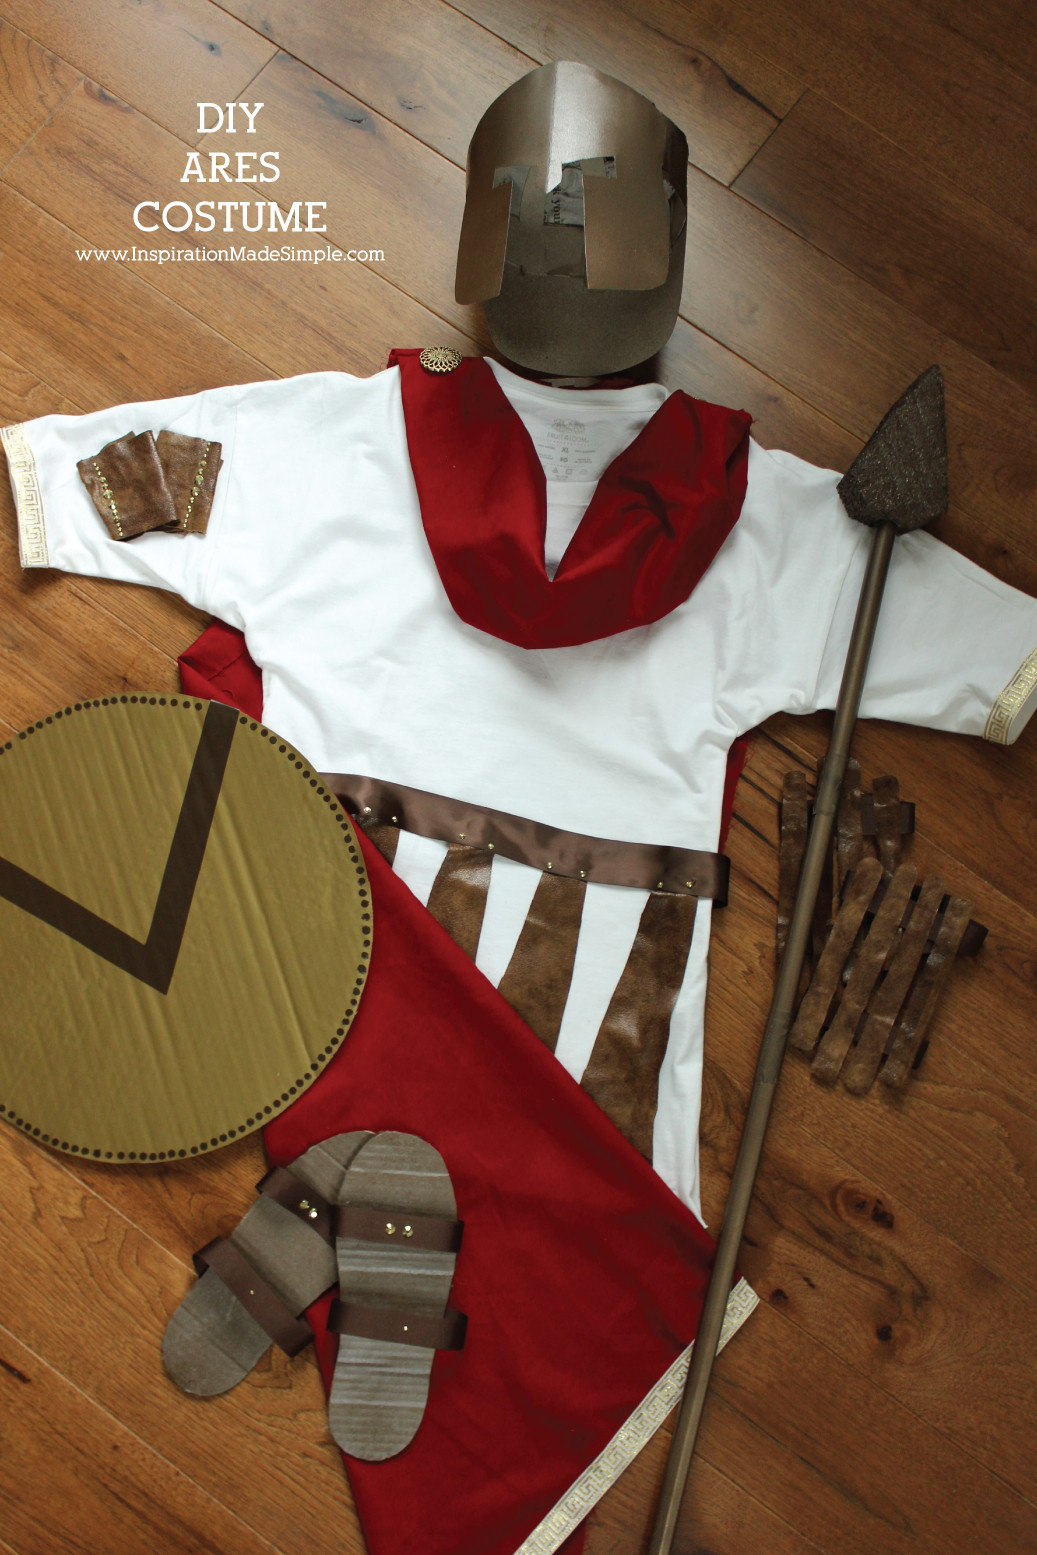 Greek Costume DIY
 DIY Ares Greek Mythology Costume Inspiration Made Simple